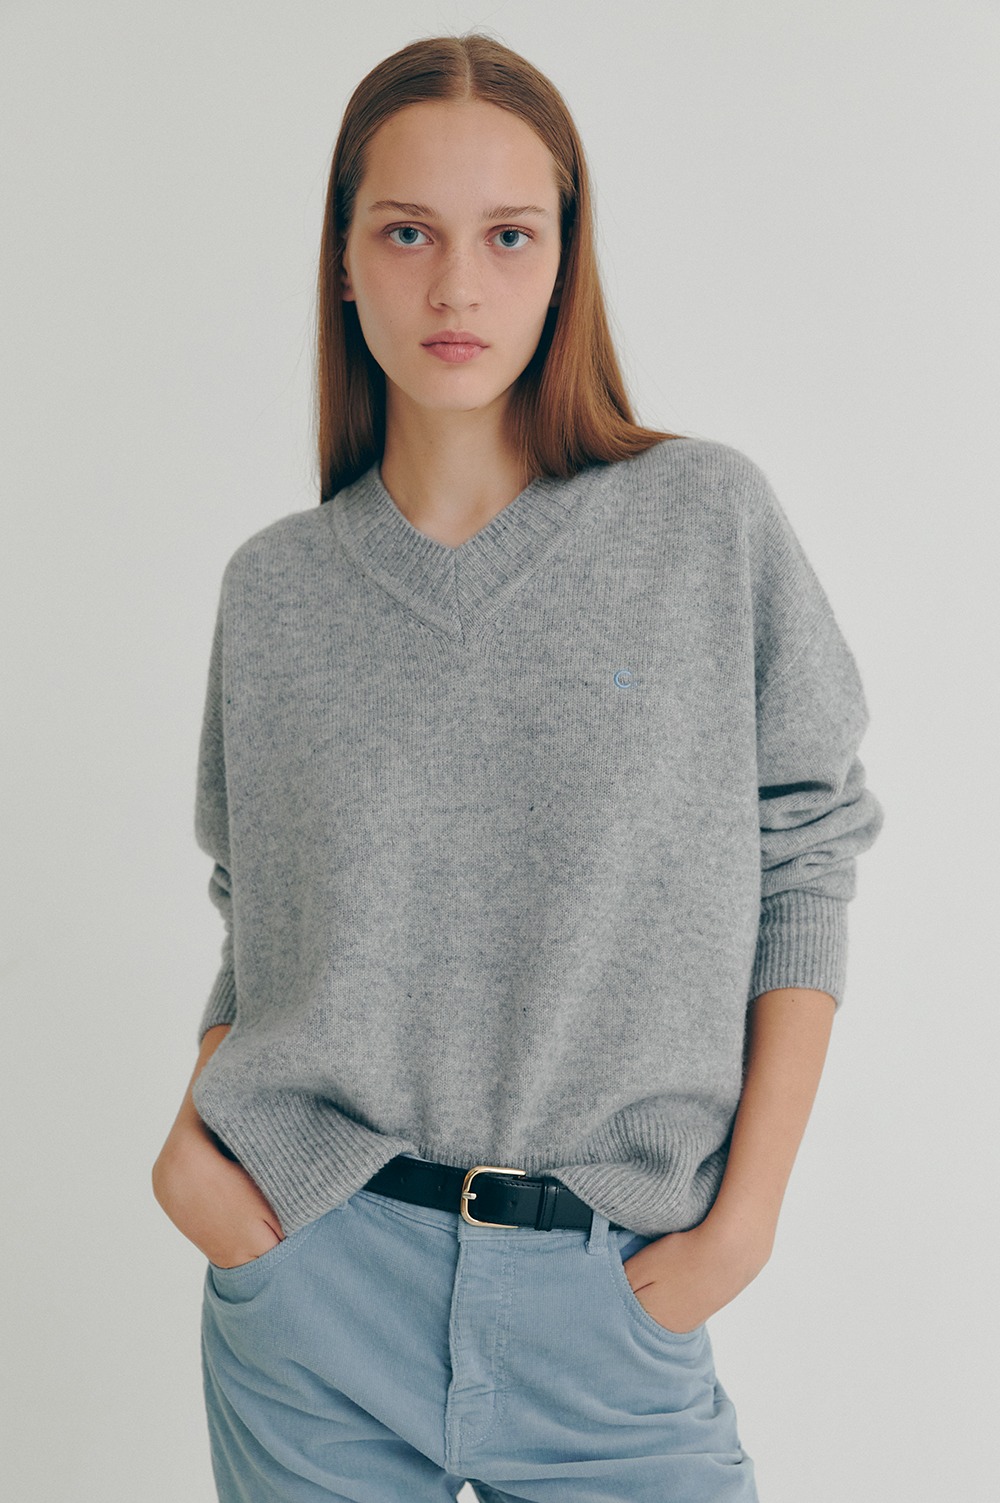 clove - [22FW clove] V-Neck Wool Sweater (Melange Grey)